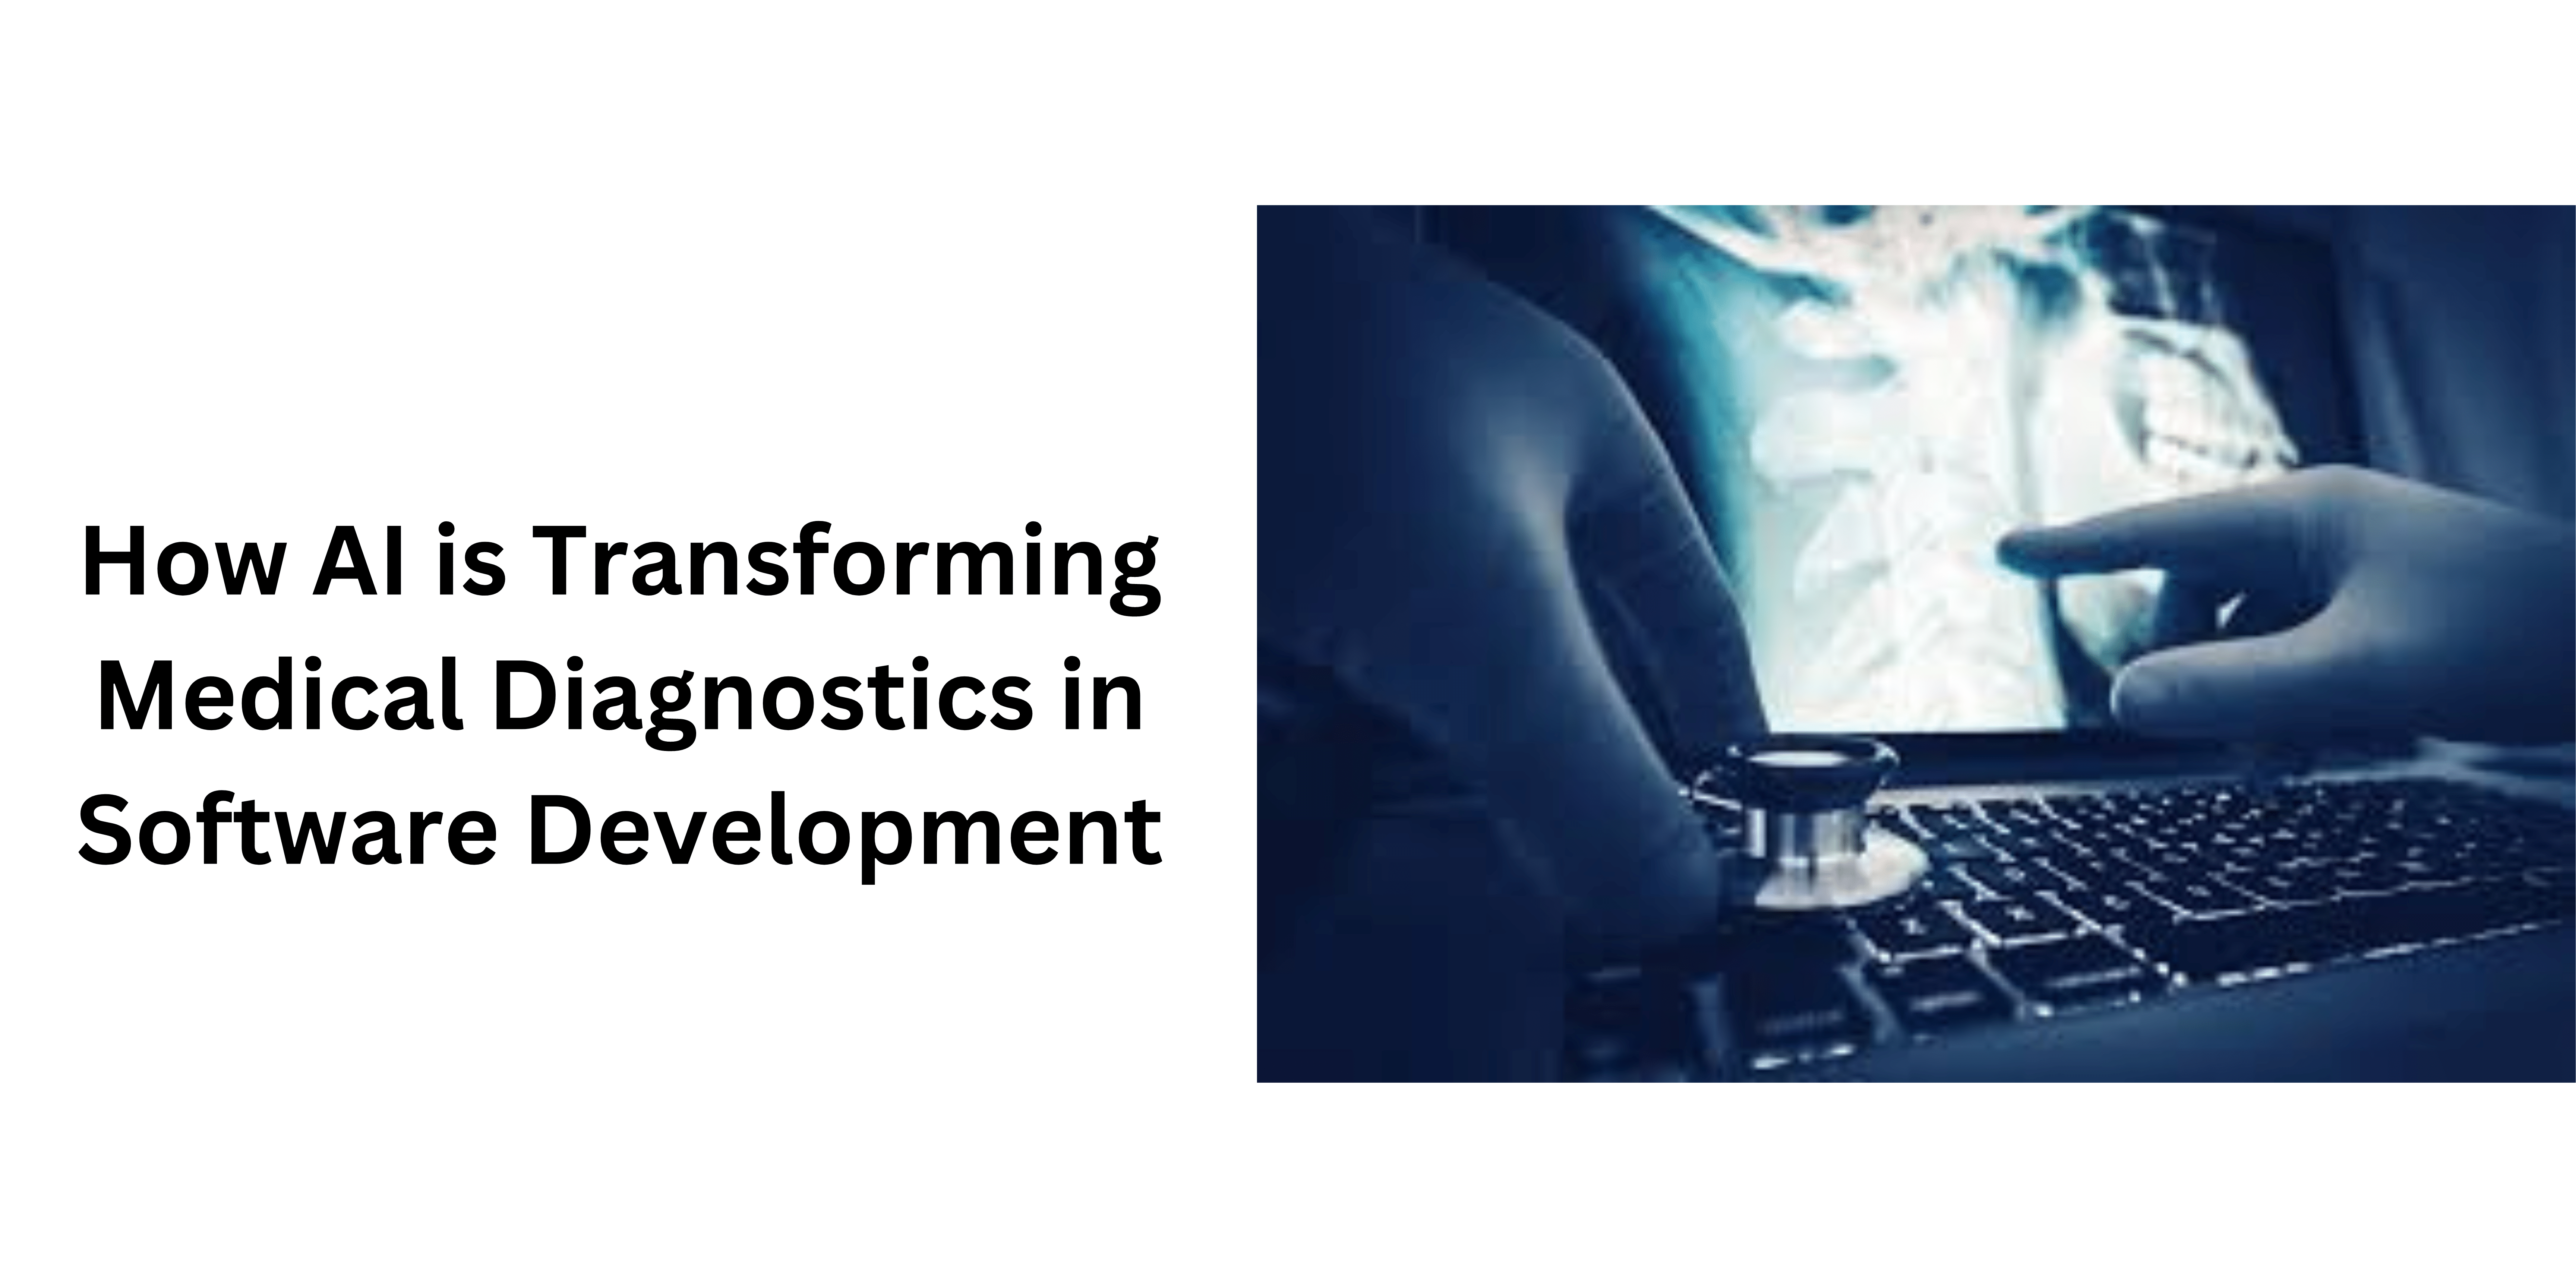 How AI is Transforming Medical Diagnostics in Software Development